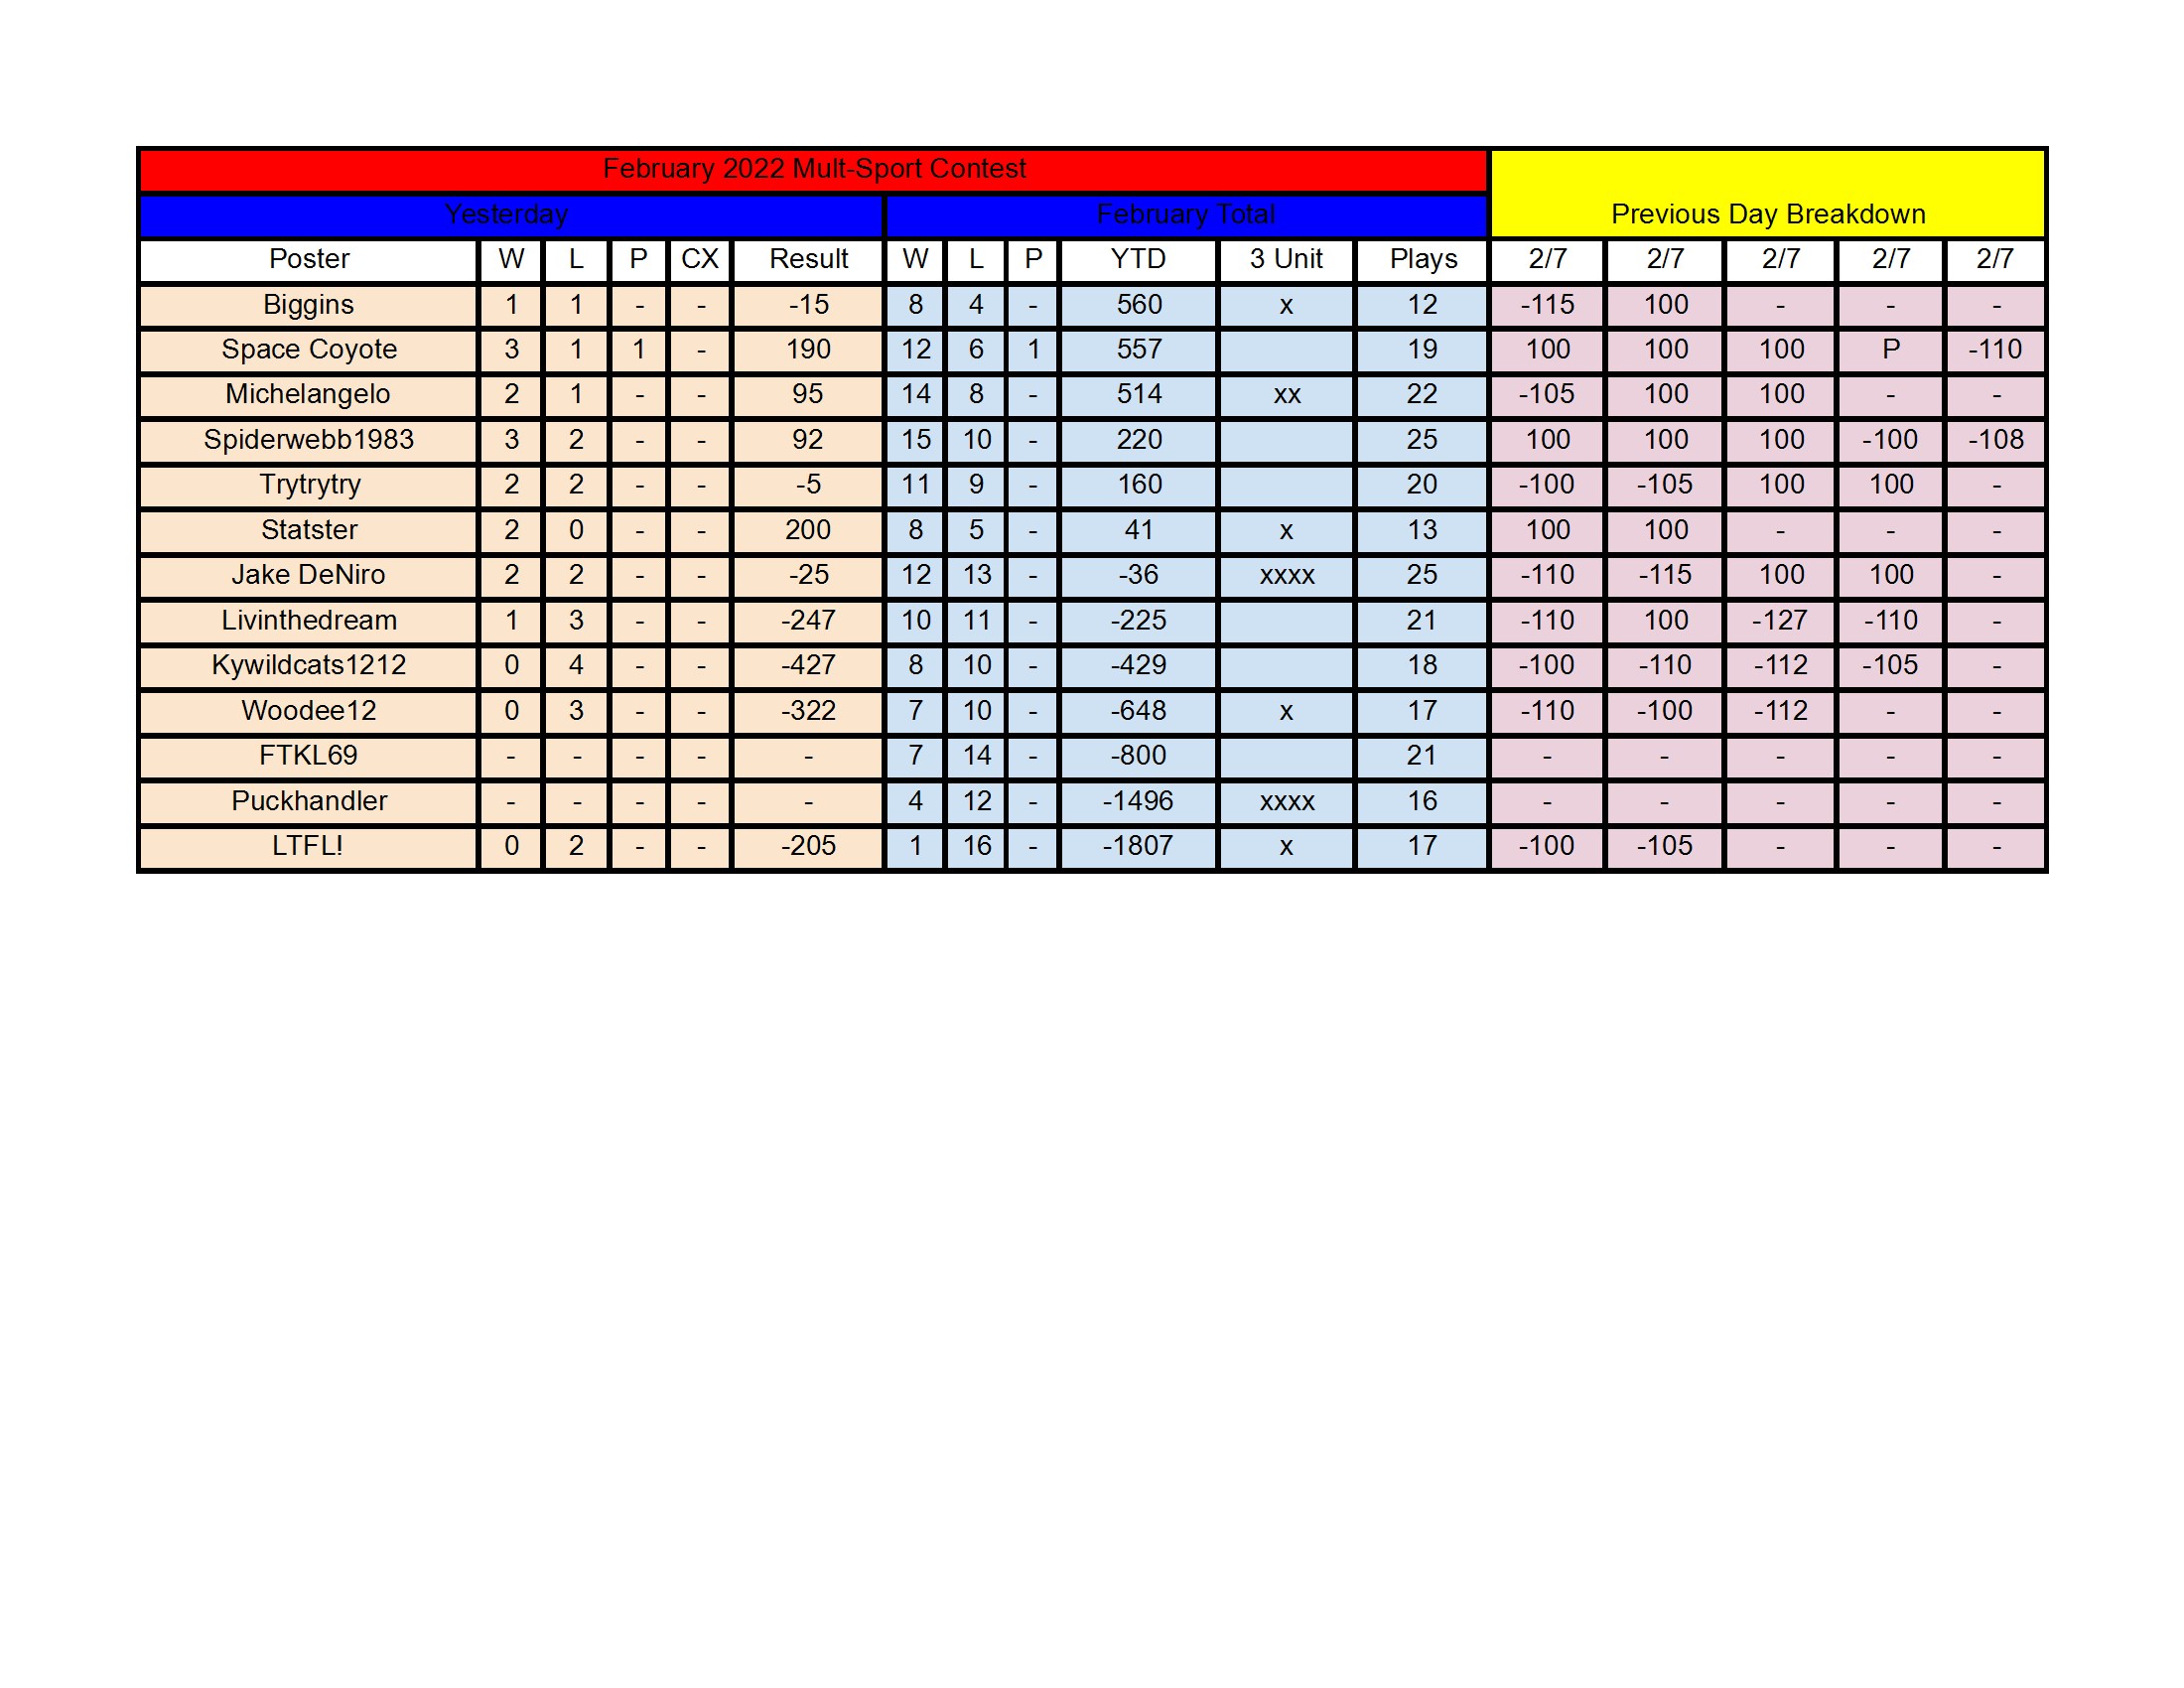 February Standings - 2_7 conv 1.jpeg